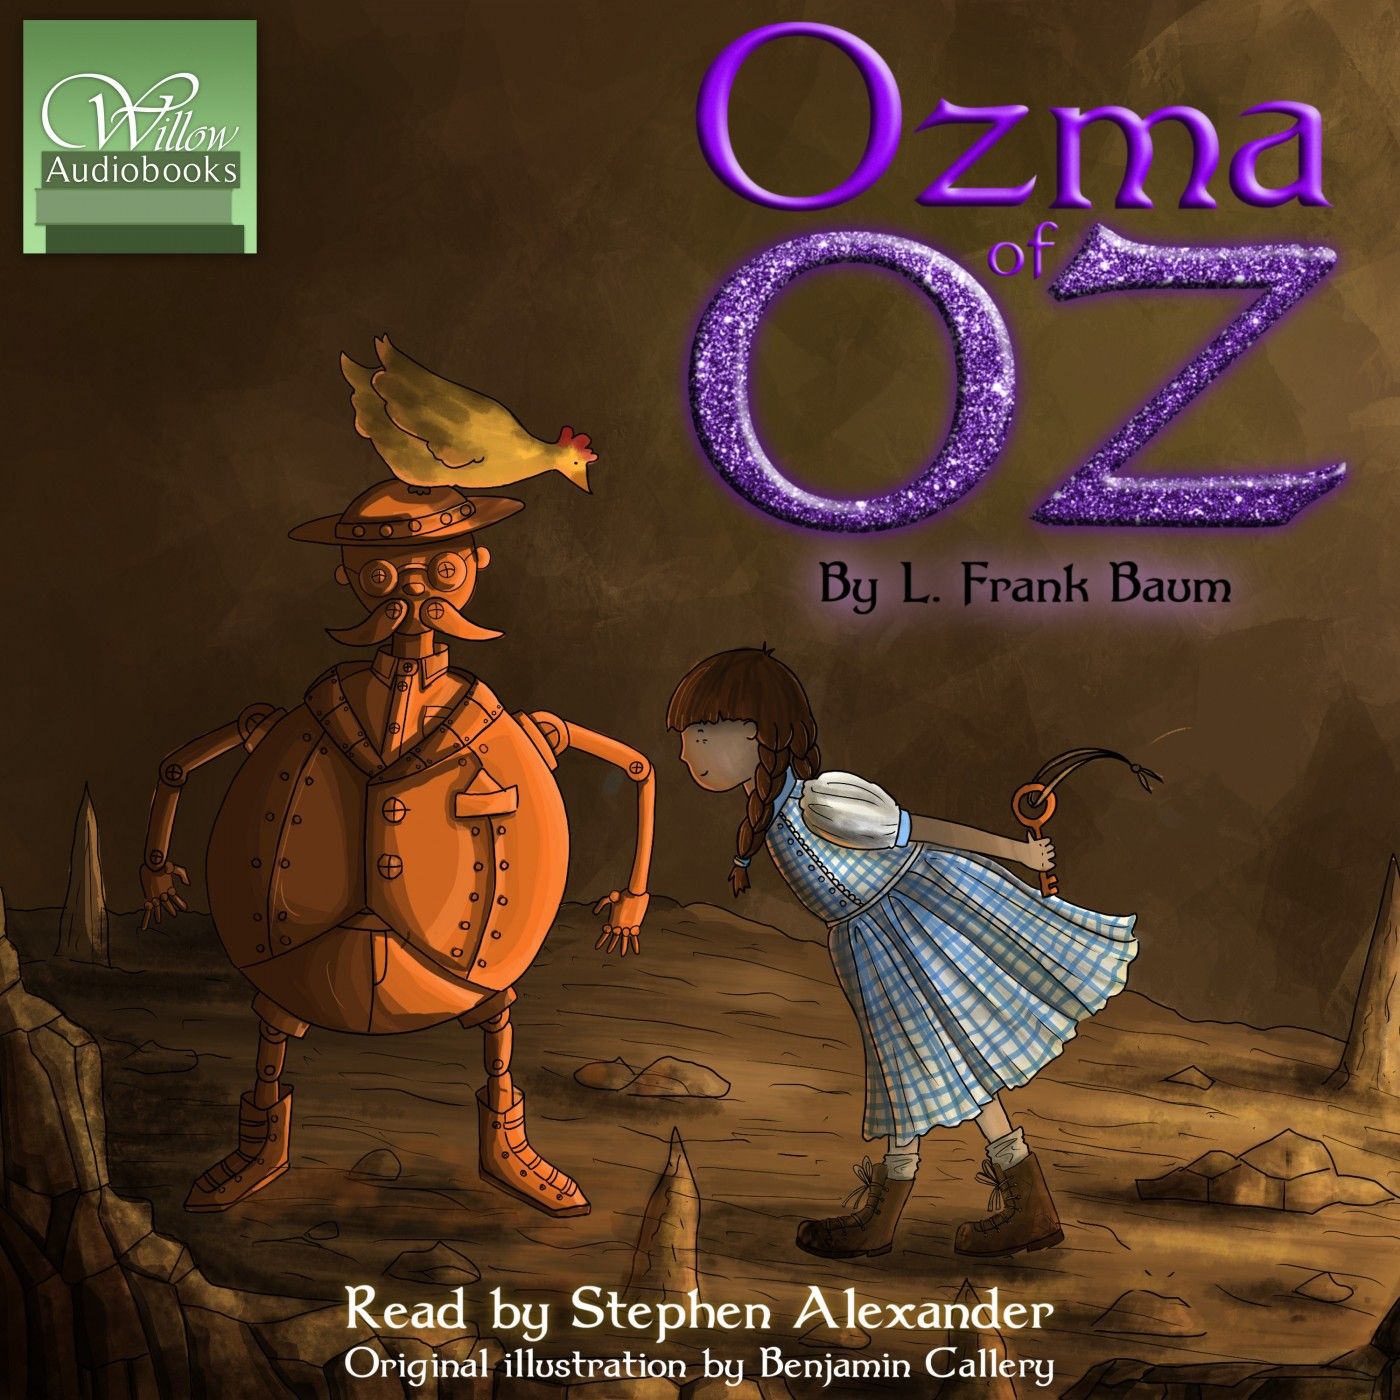 TRAILER: Ozma of Oz